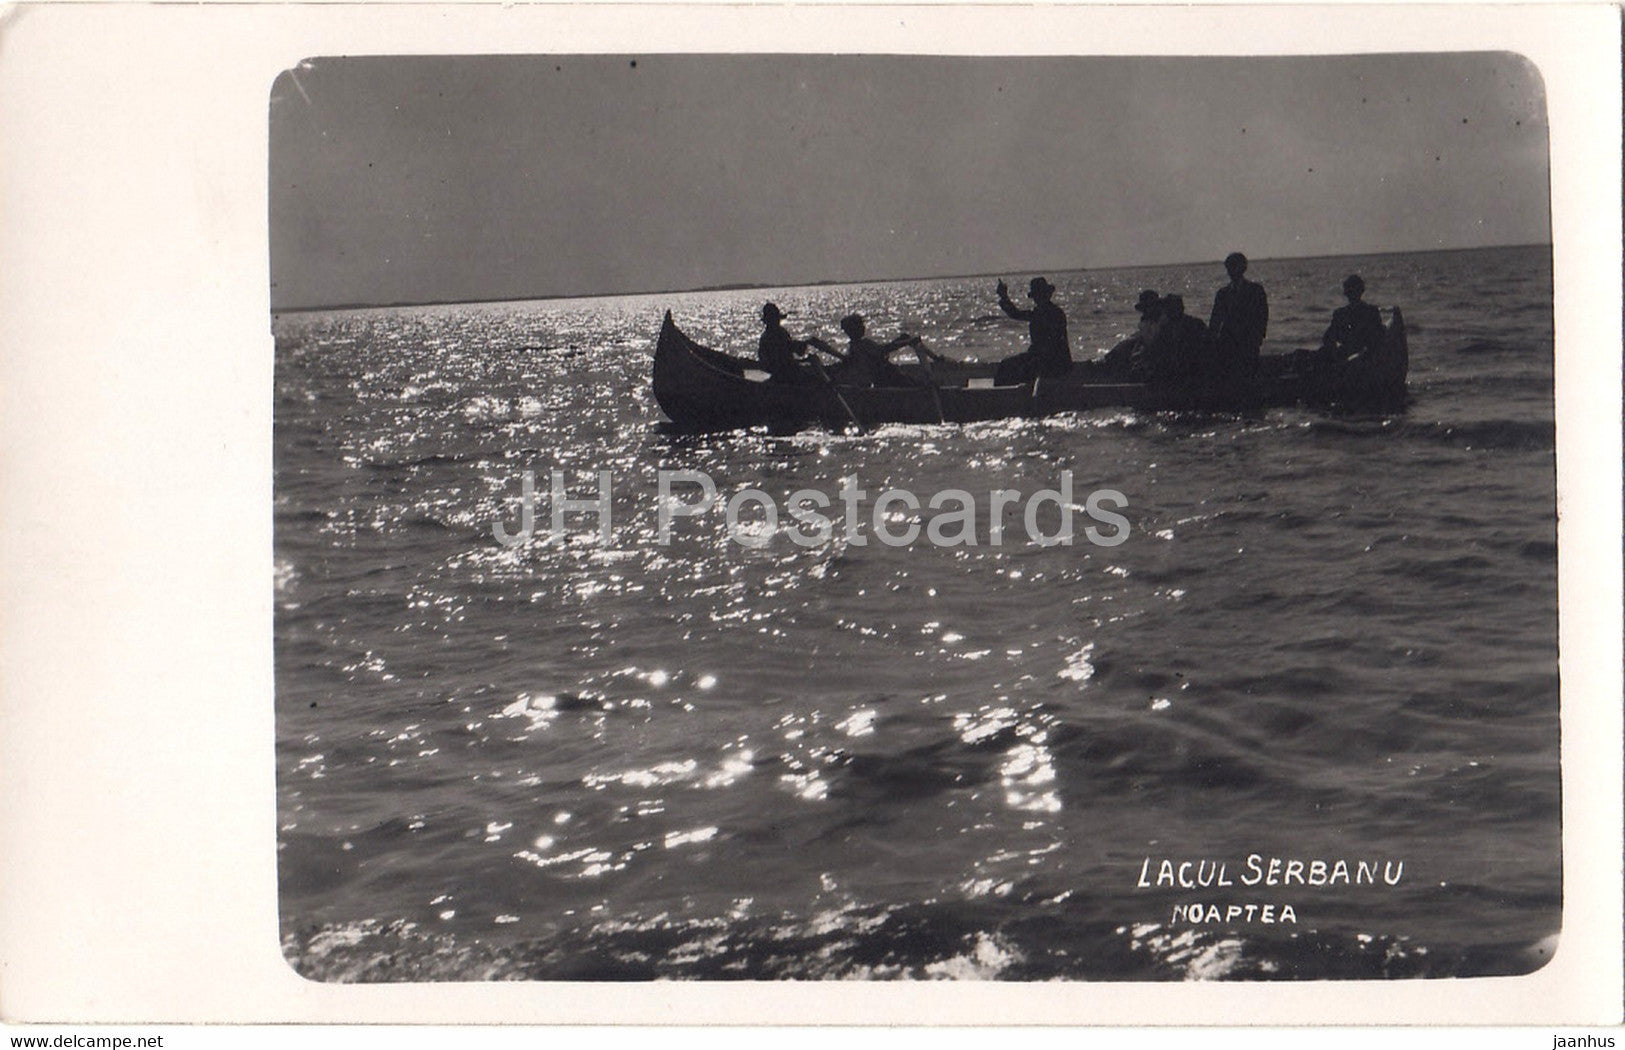 Lacul Serbanu - Noaptea - Serban lake - boat - old postcard - Romania - unused - JH Postcards